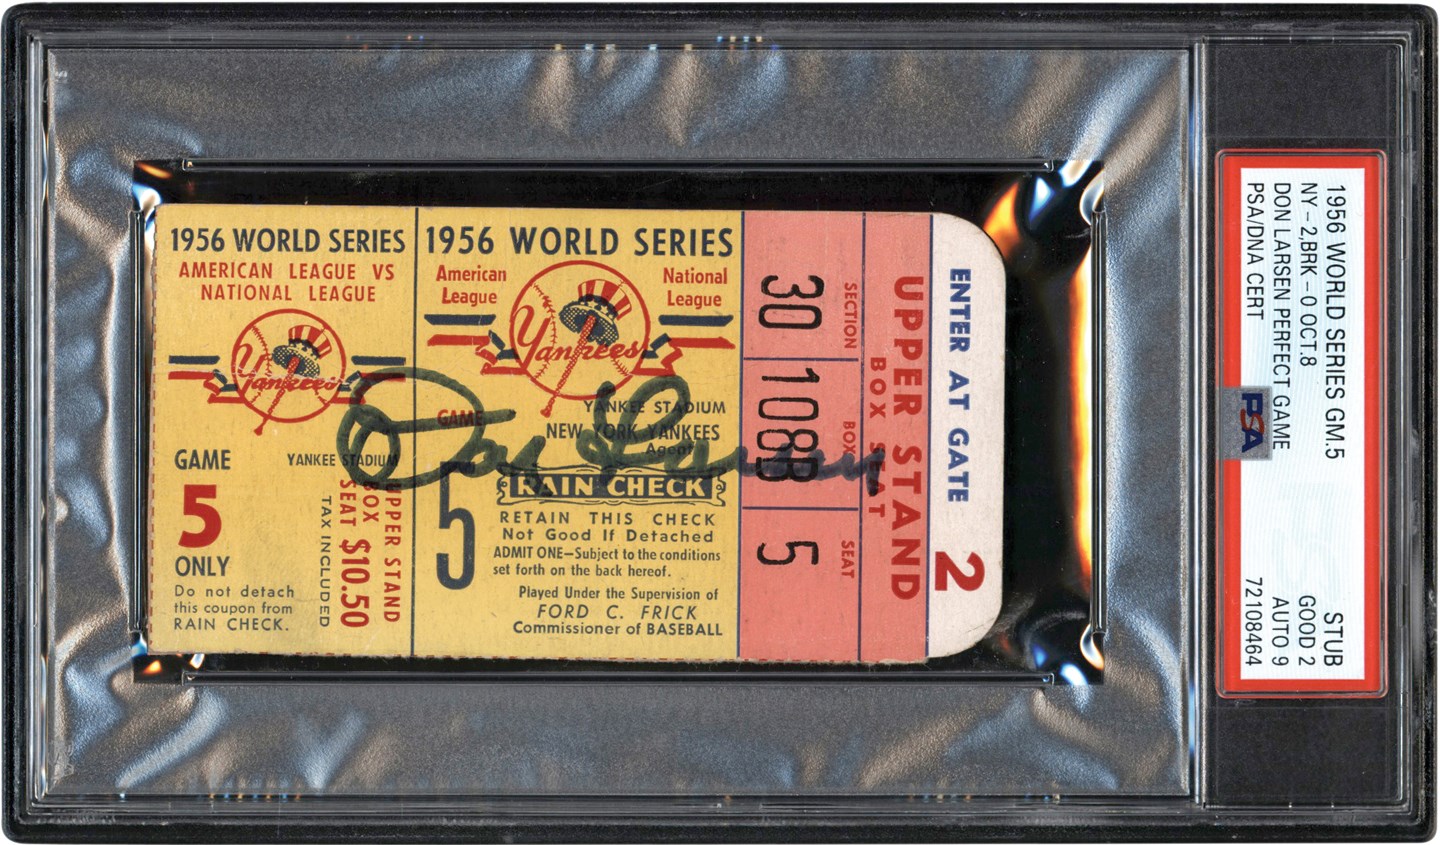 - 1956 World Series Don Larsen Signed Perfect Game Ticket Stub PSA GD 2 - Auto 9